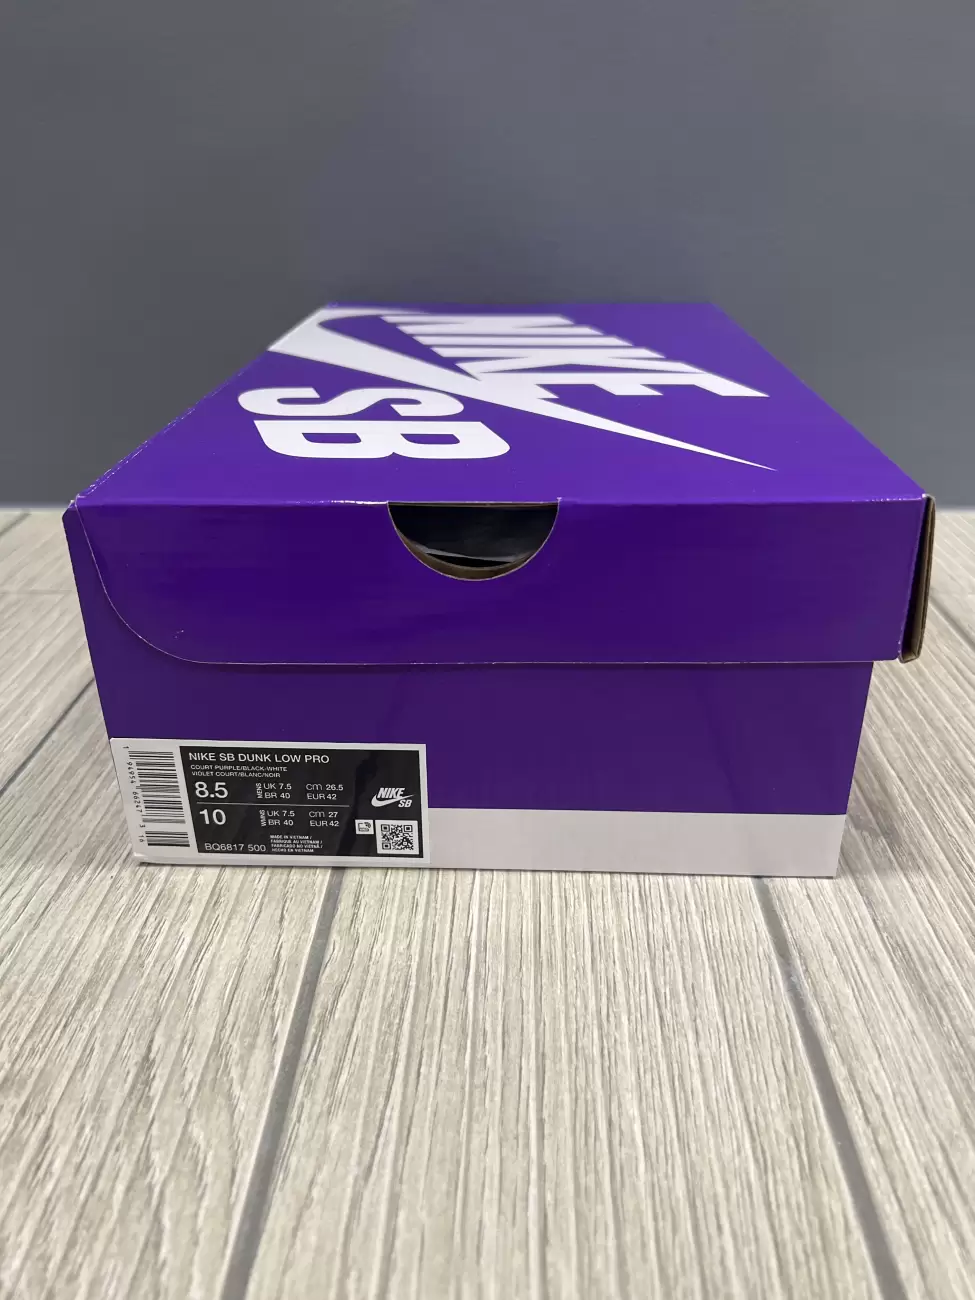 Dunk Low SB 'Court Purple' - Nike - BQ6817 500 - court purple/white/court  purple/black